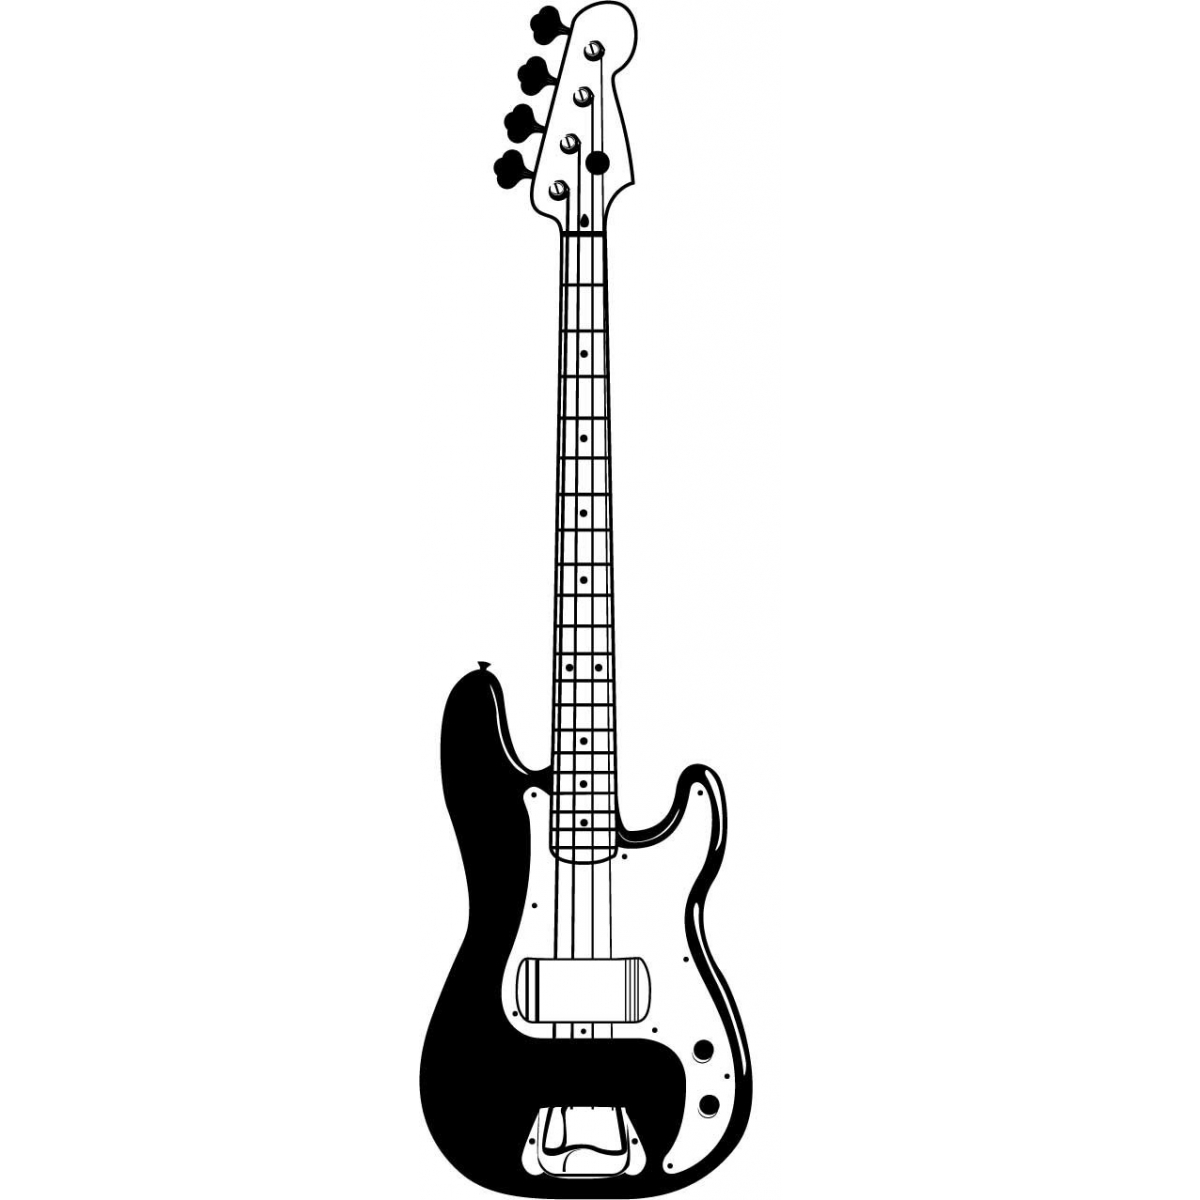 Bass Guitar Silhouette